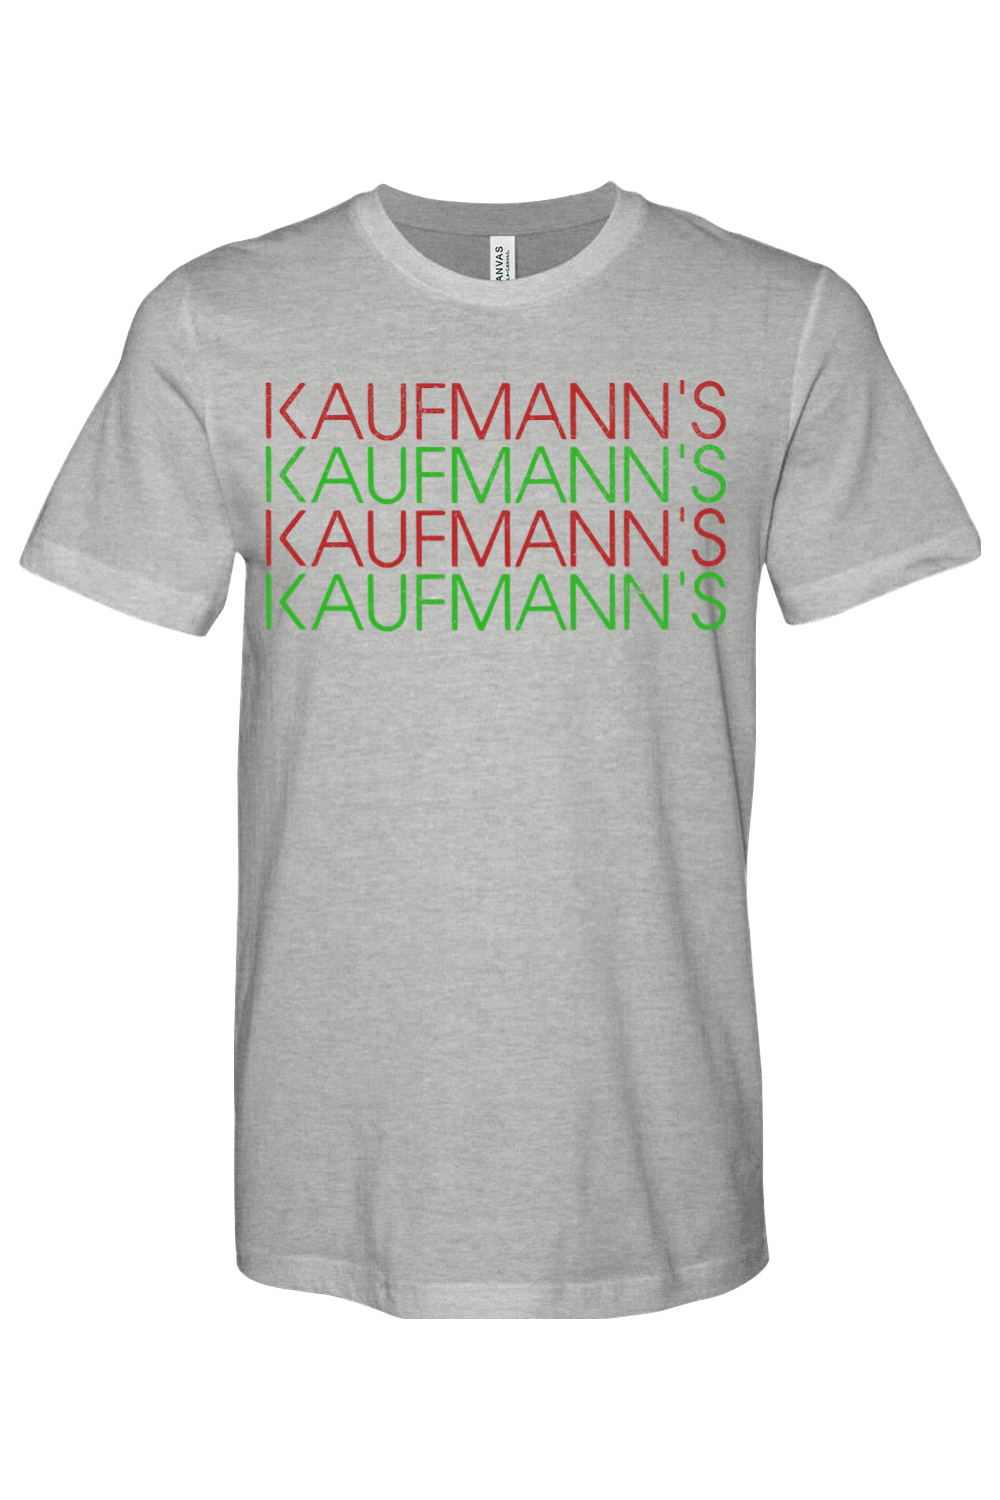 Kaufmann's Department Store - Pittsburgh - Yinzylvania